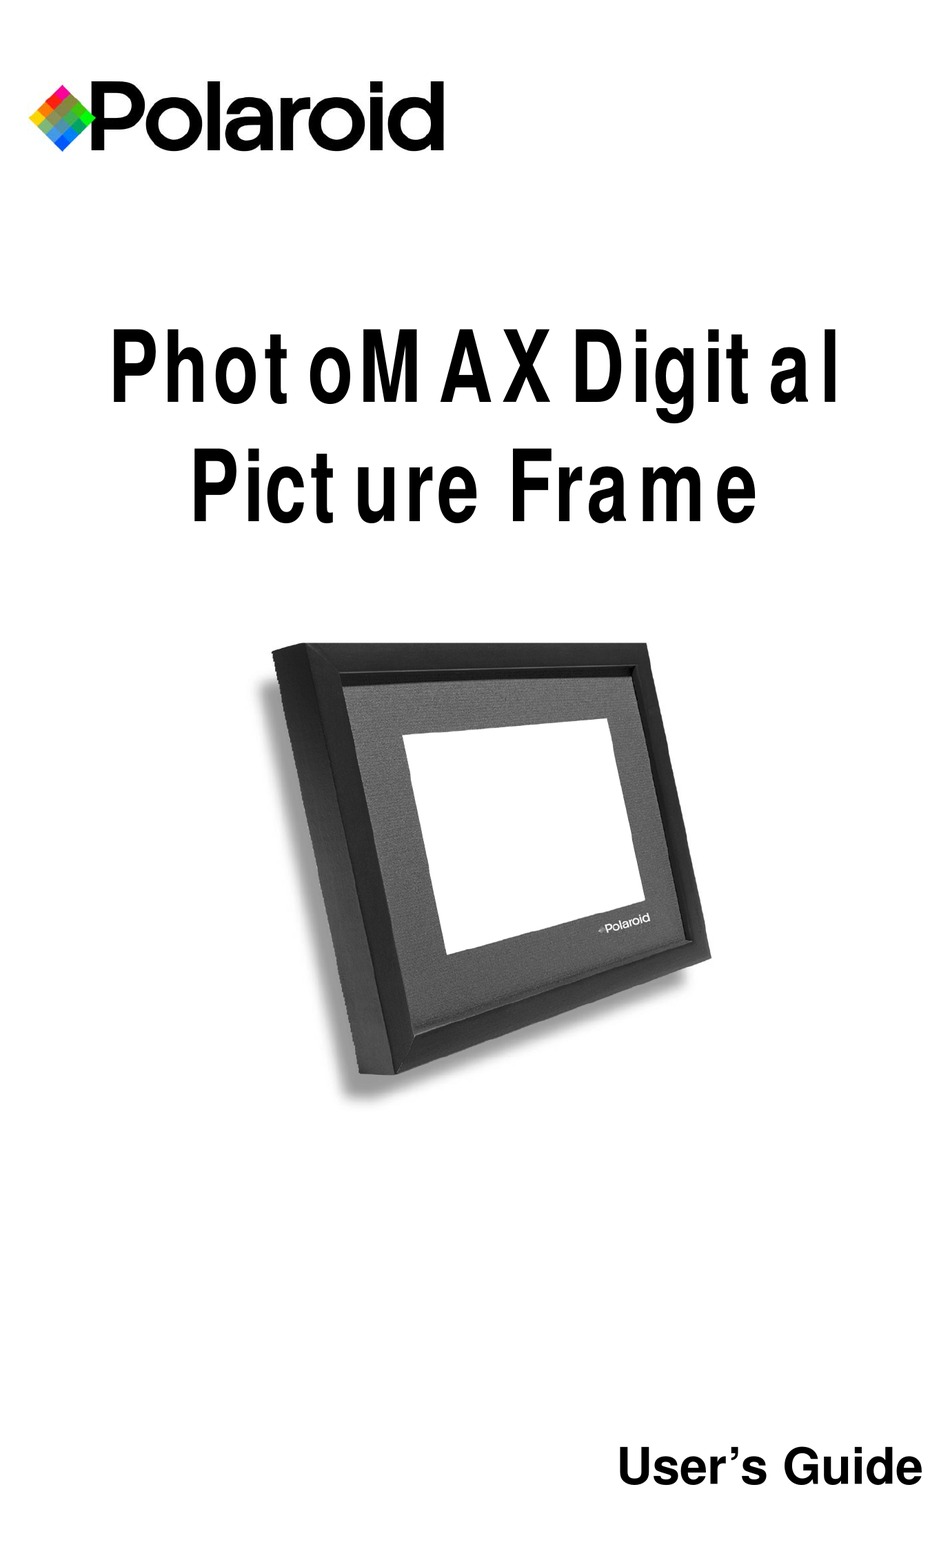 polaroid digital photo frame 7 screen